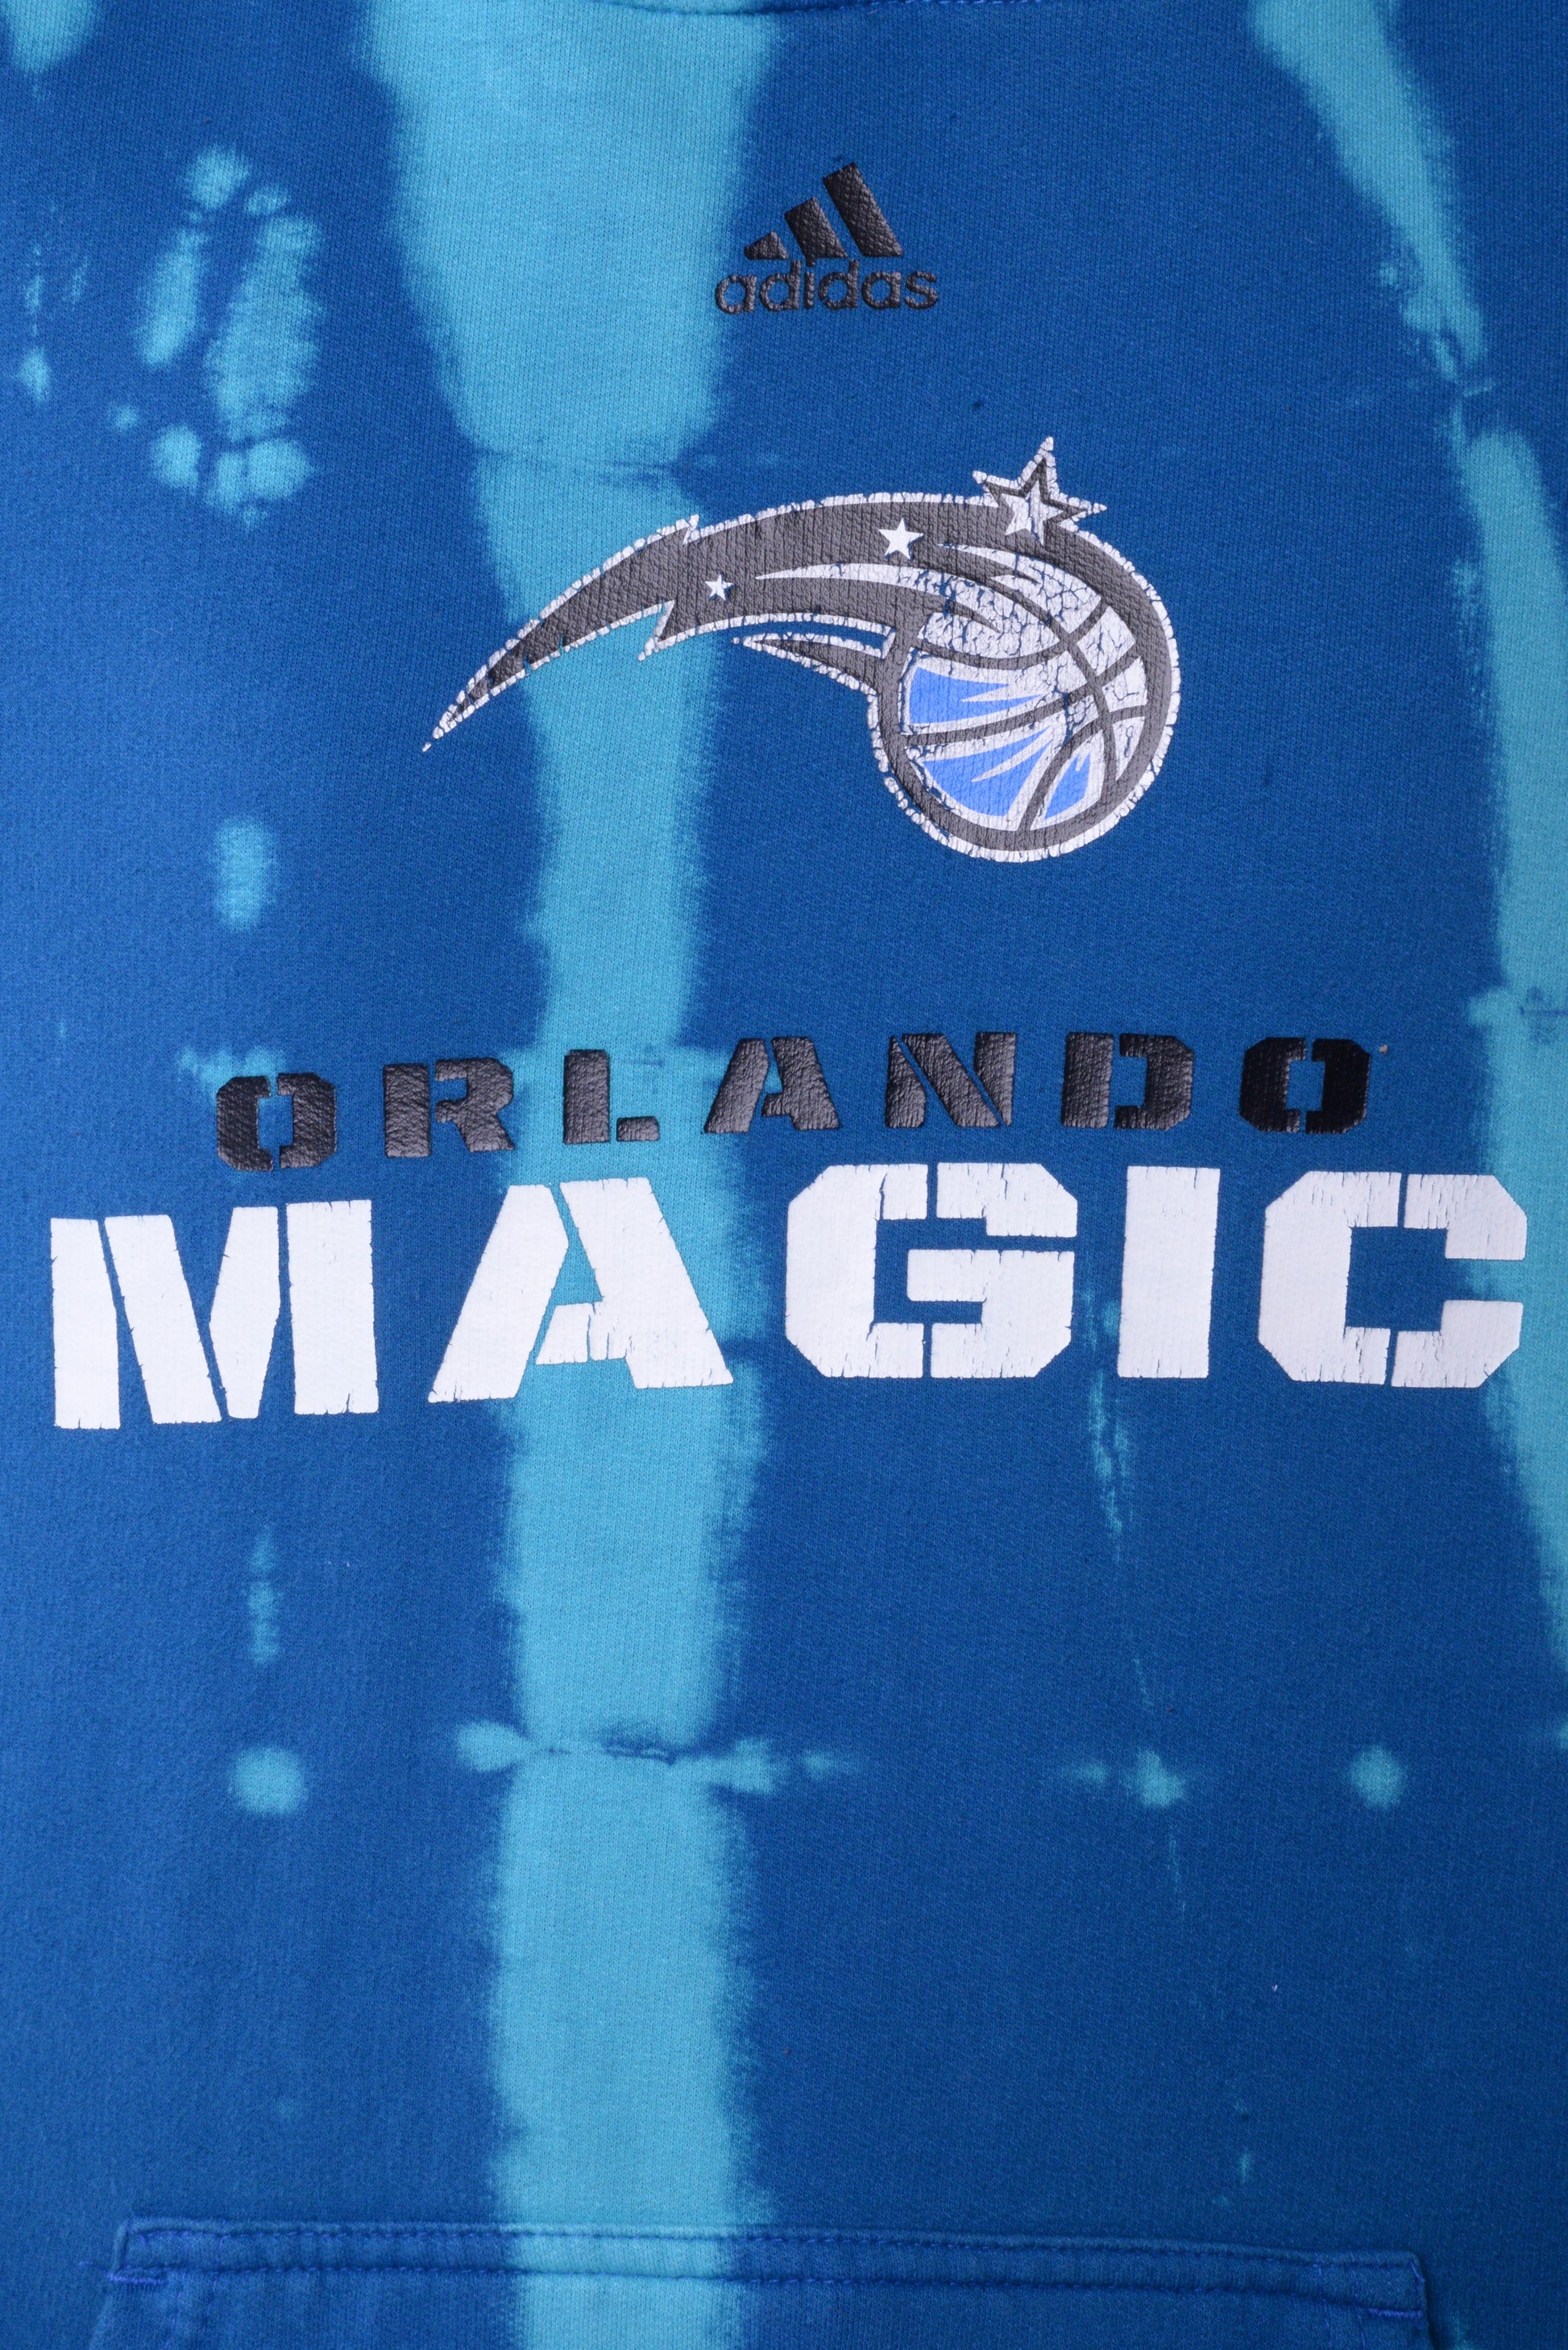 Orlando Magic Tie Dye Sweatshirt